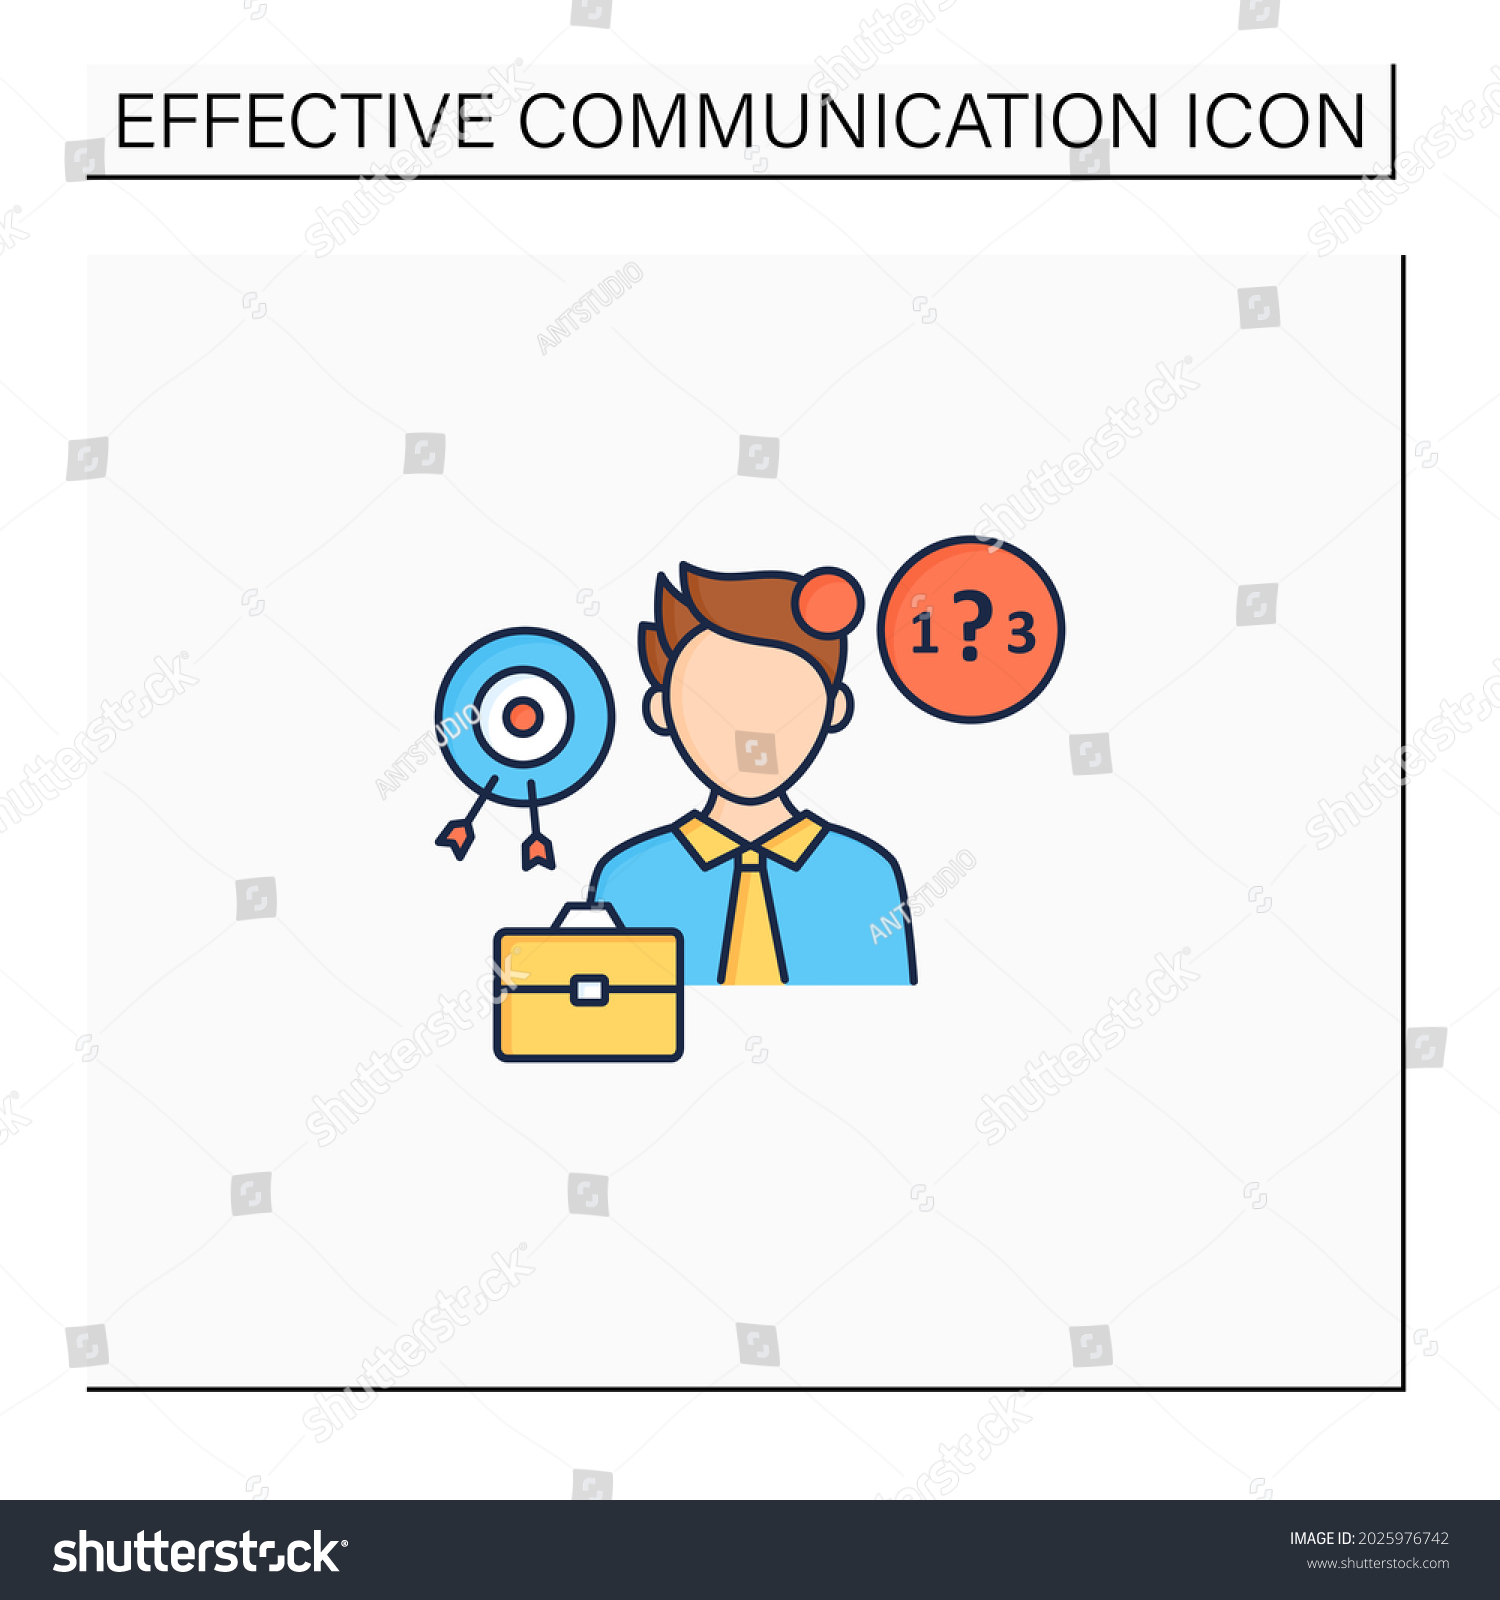 ineffective communication cartoon